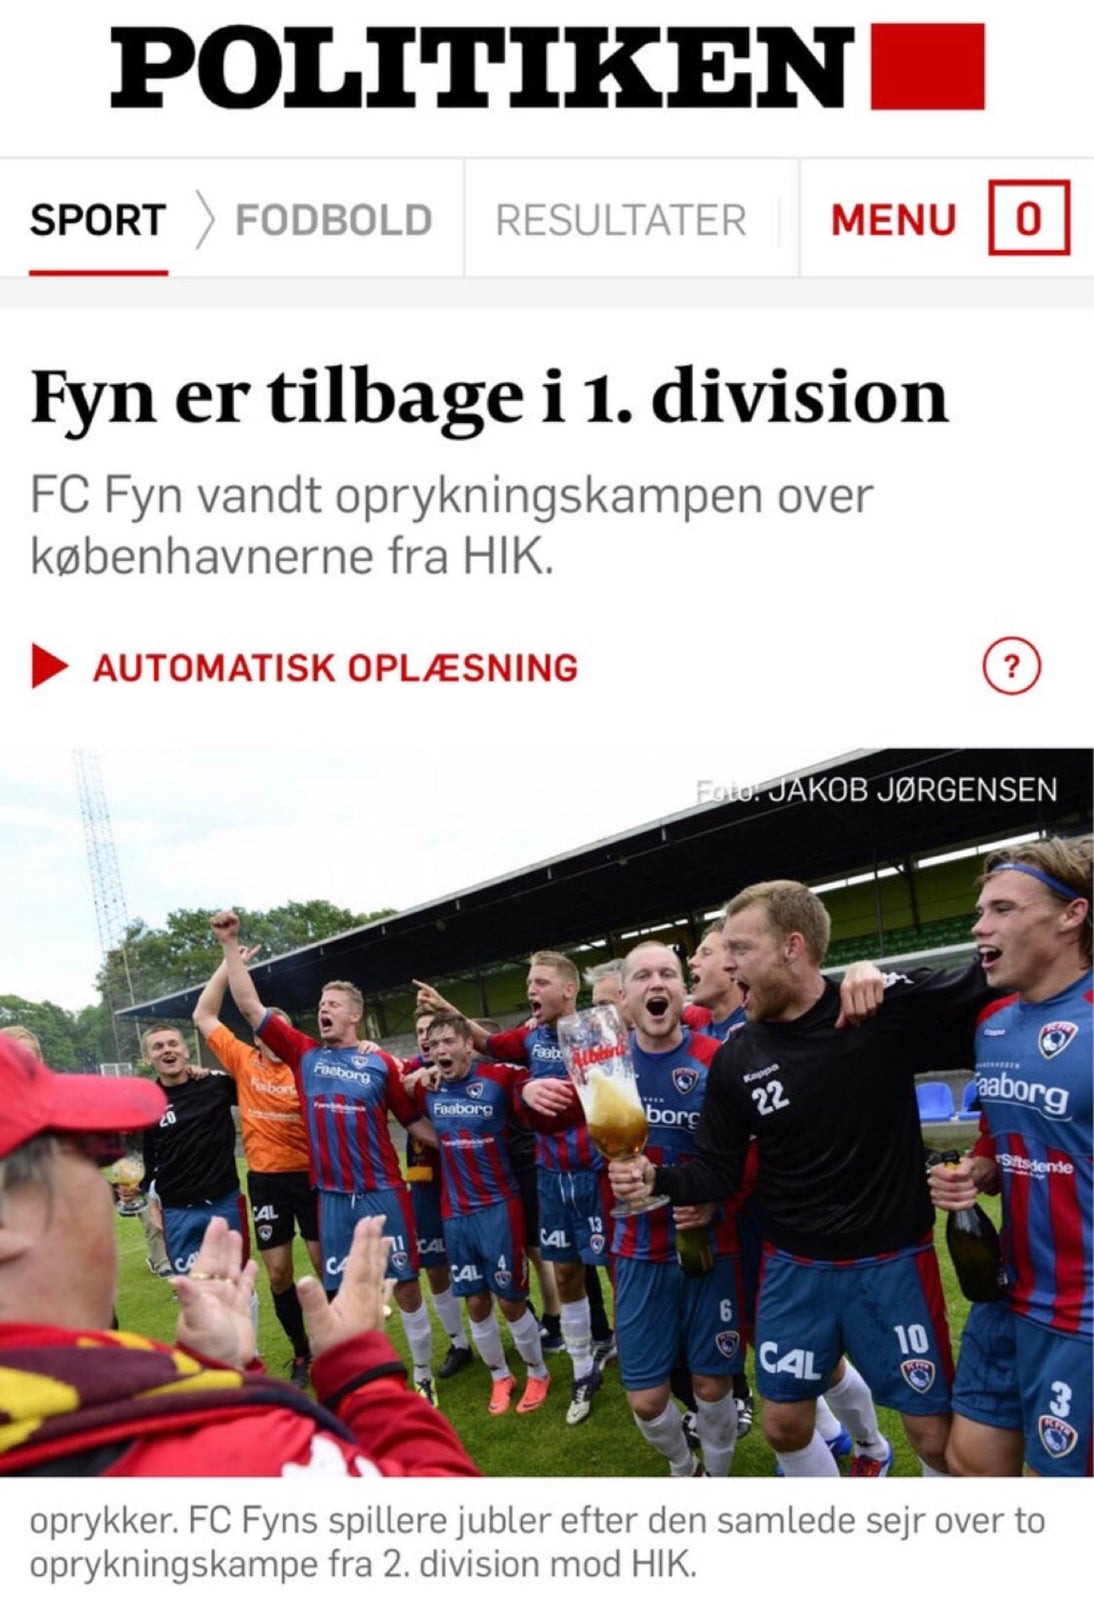 Fodboldtrøje, Odense OB FC Fyn, Hummel